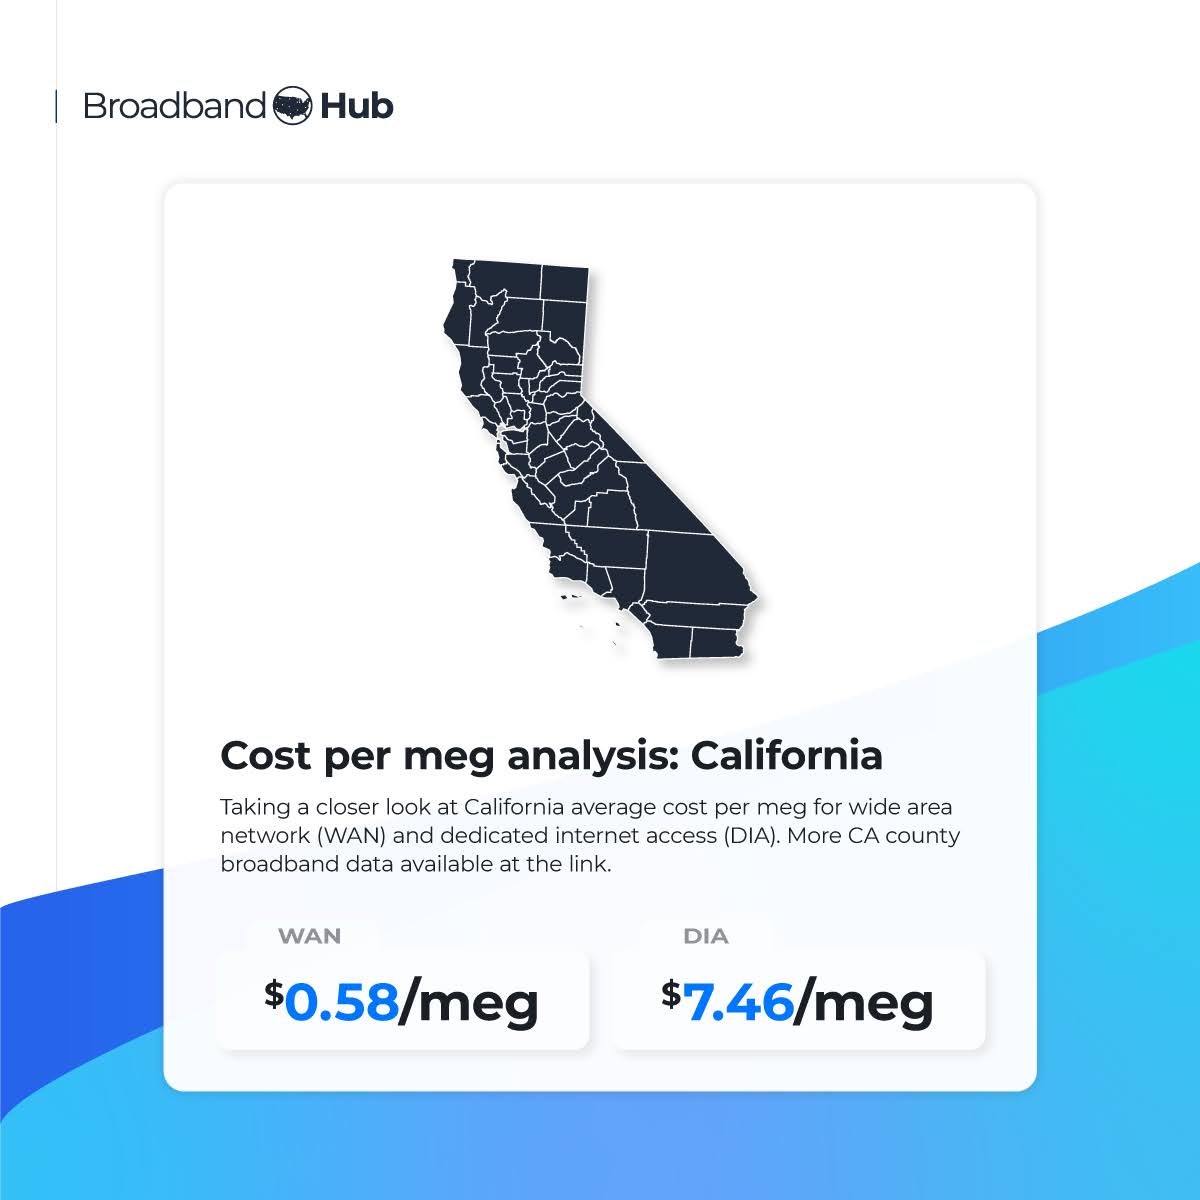 Cost per meg analysis: California